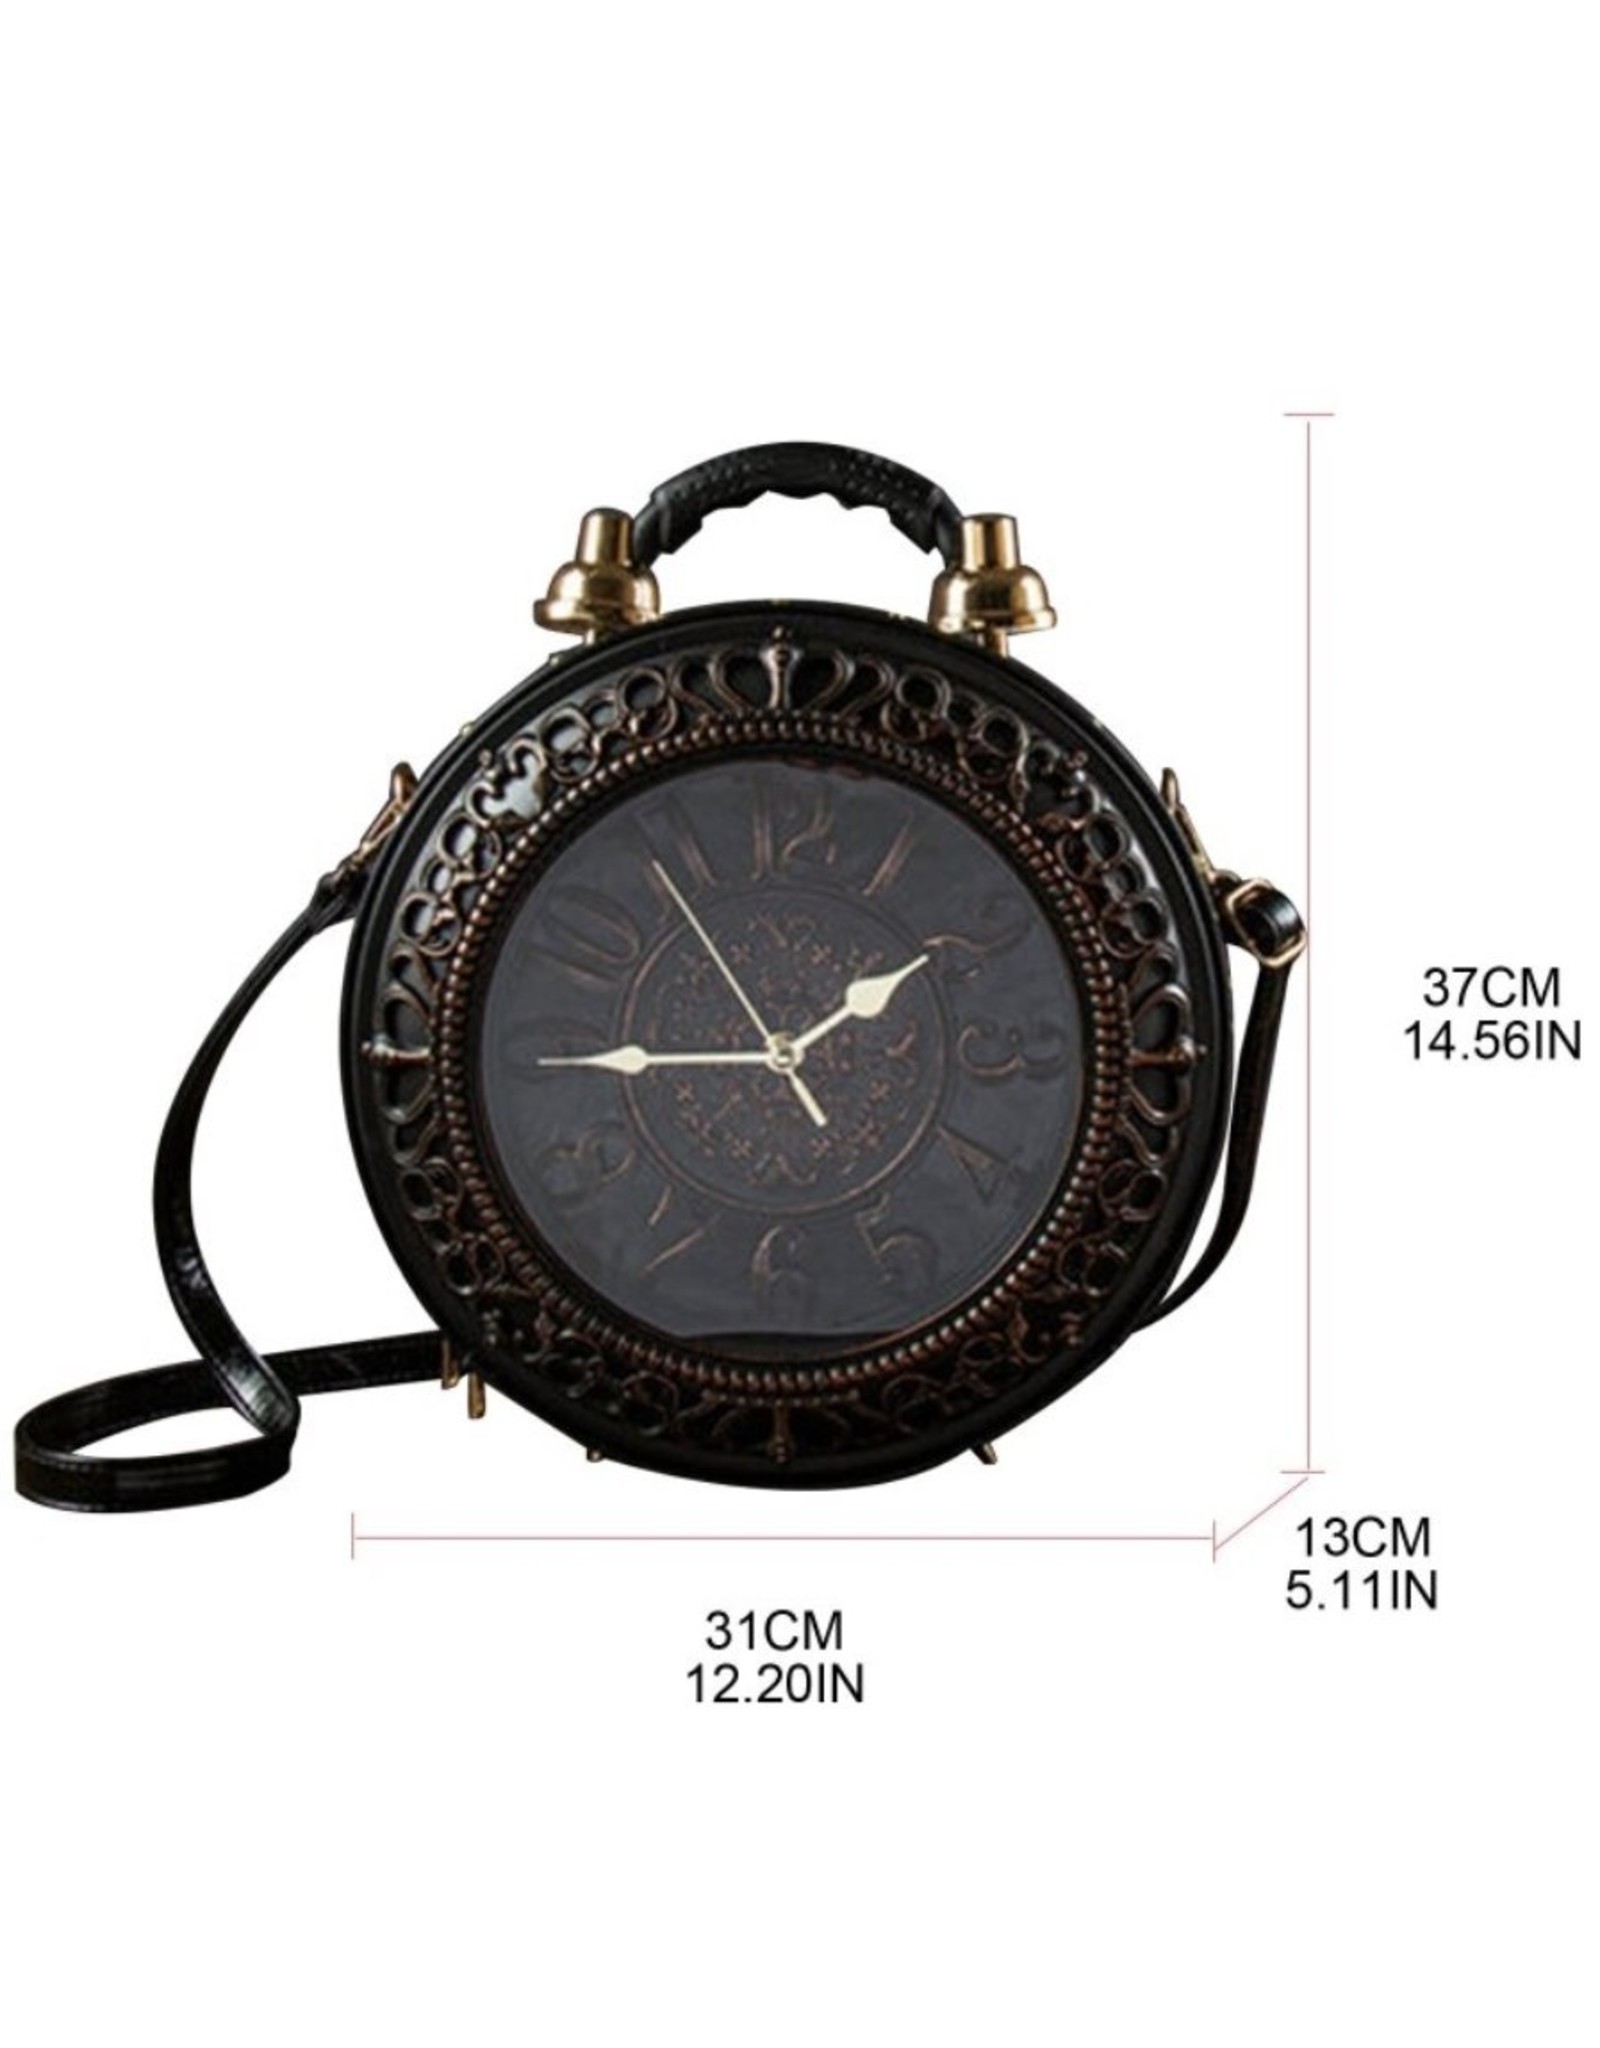 Magic Bags Fantasy bags - Clock bag with Working Clock Vintage Brown